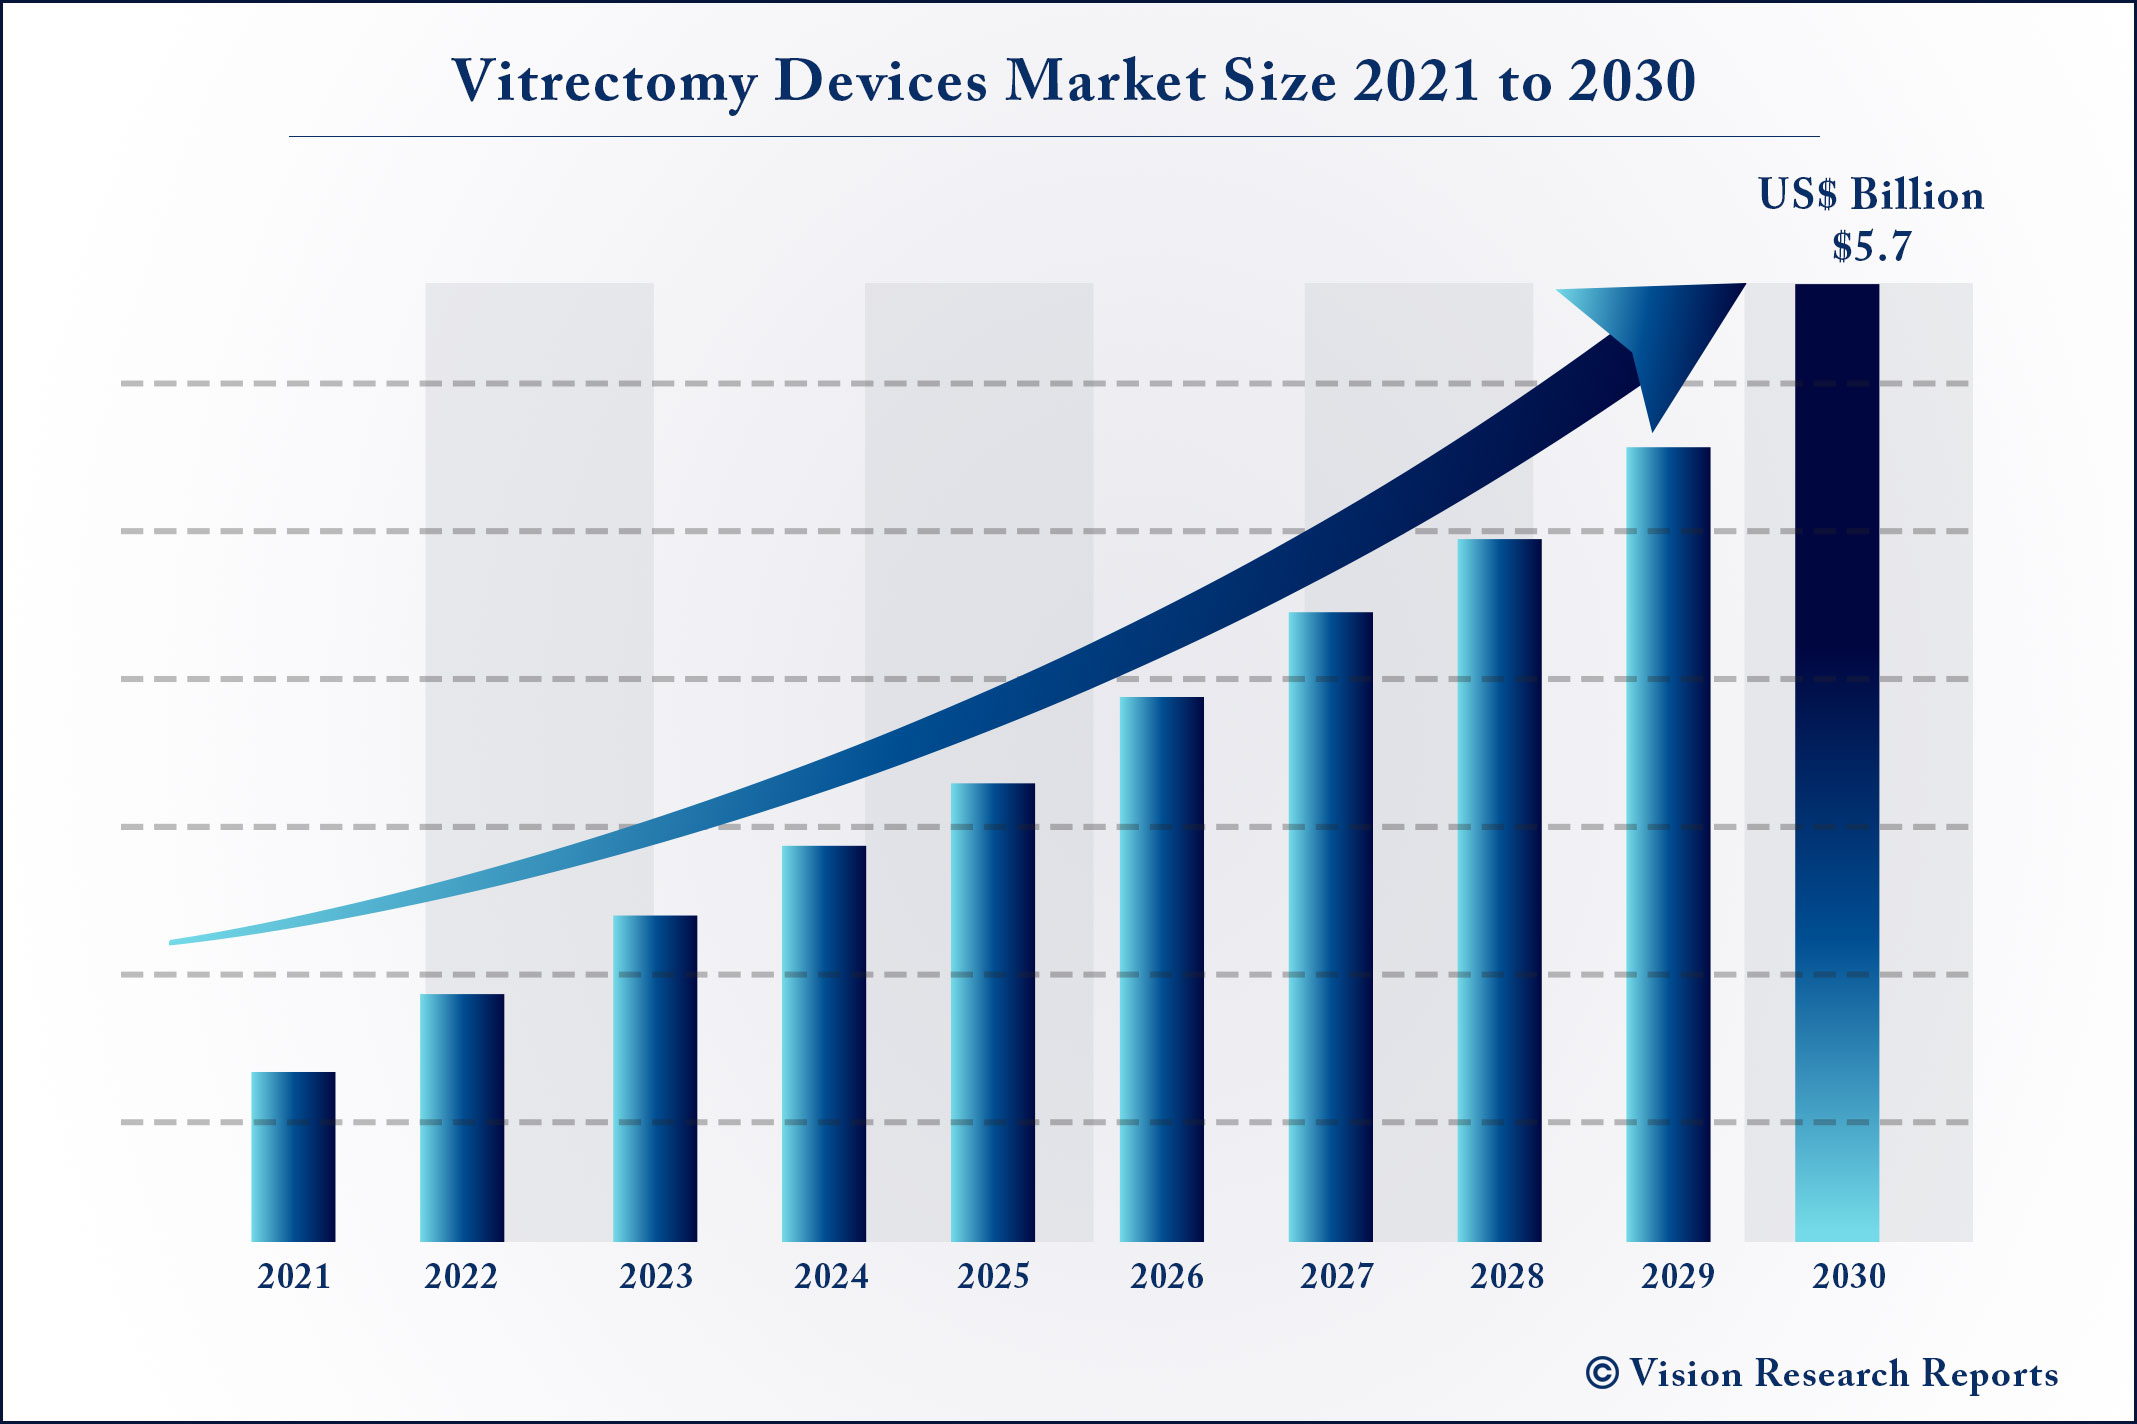 Vitrectomy Devices Market Size 2021 to 2030